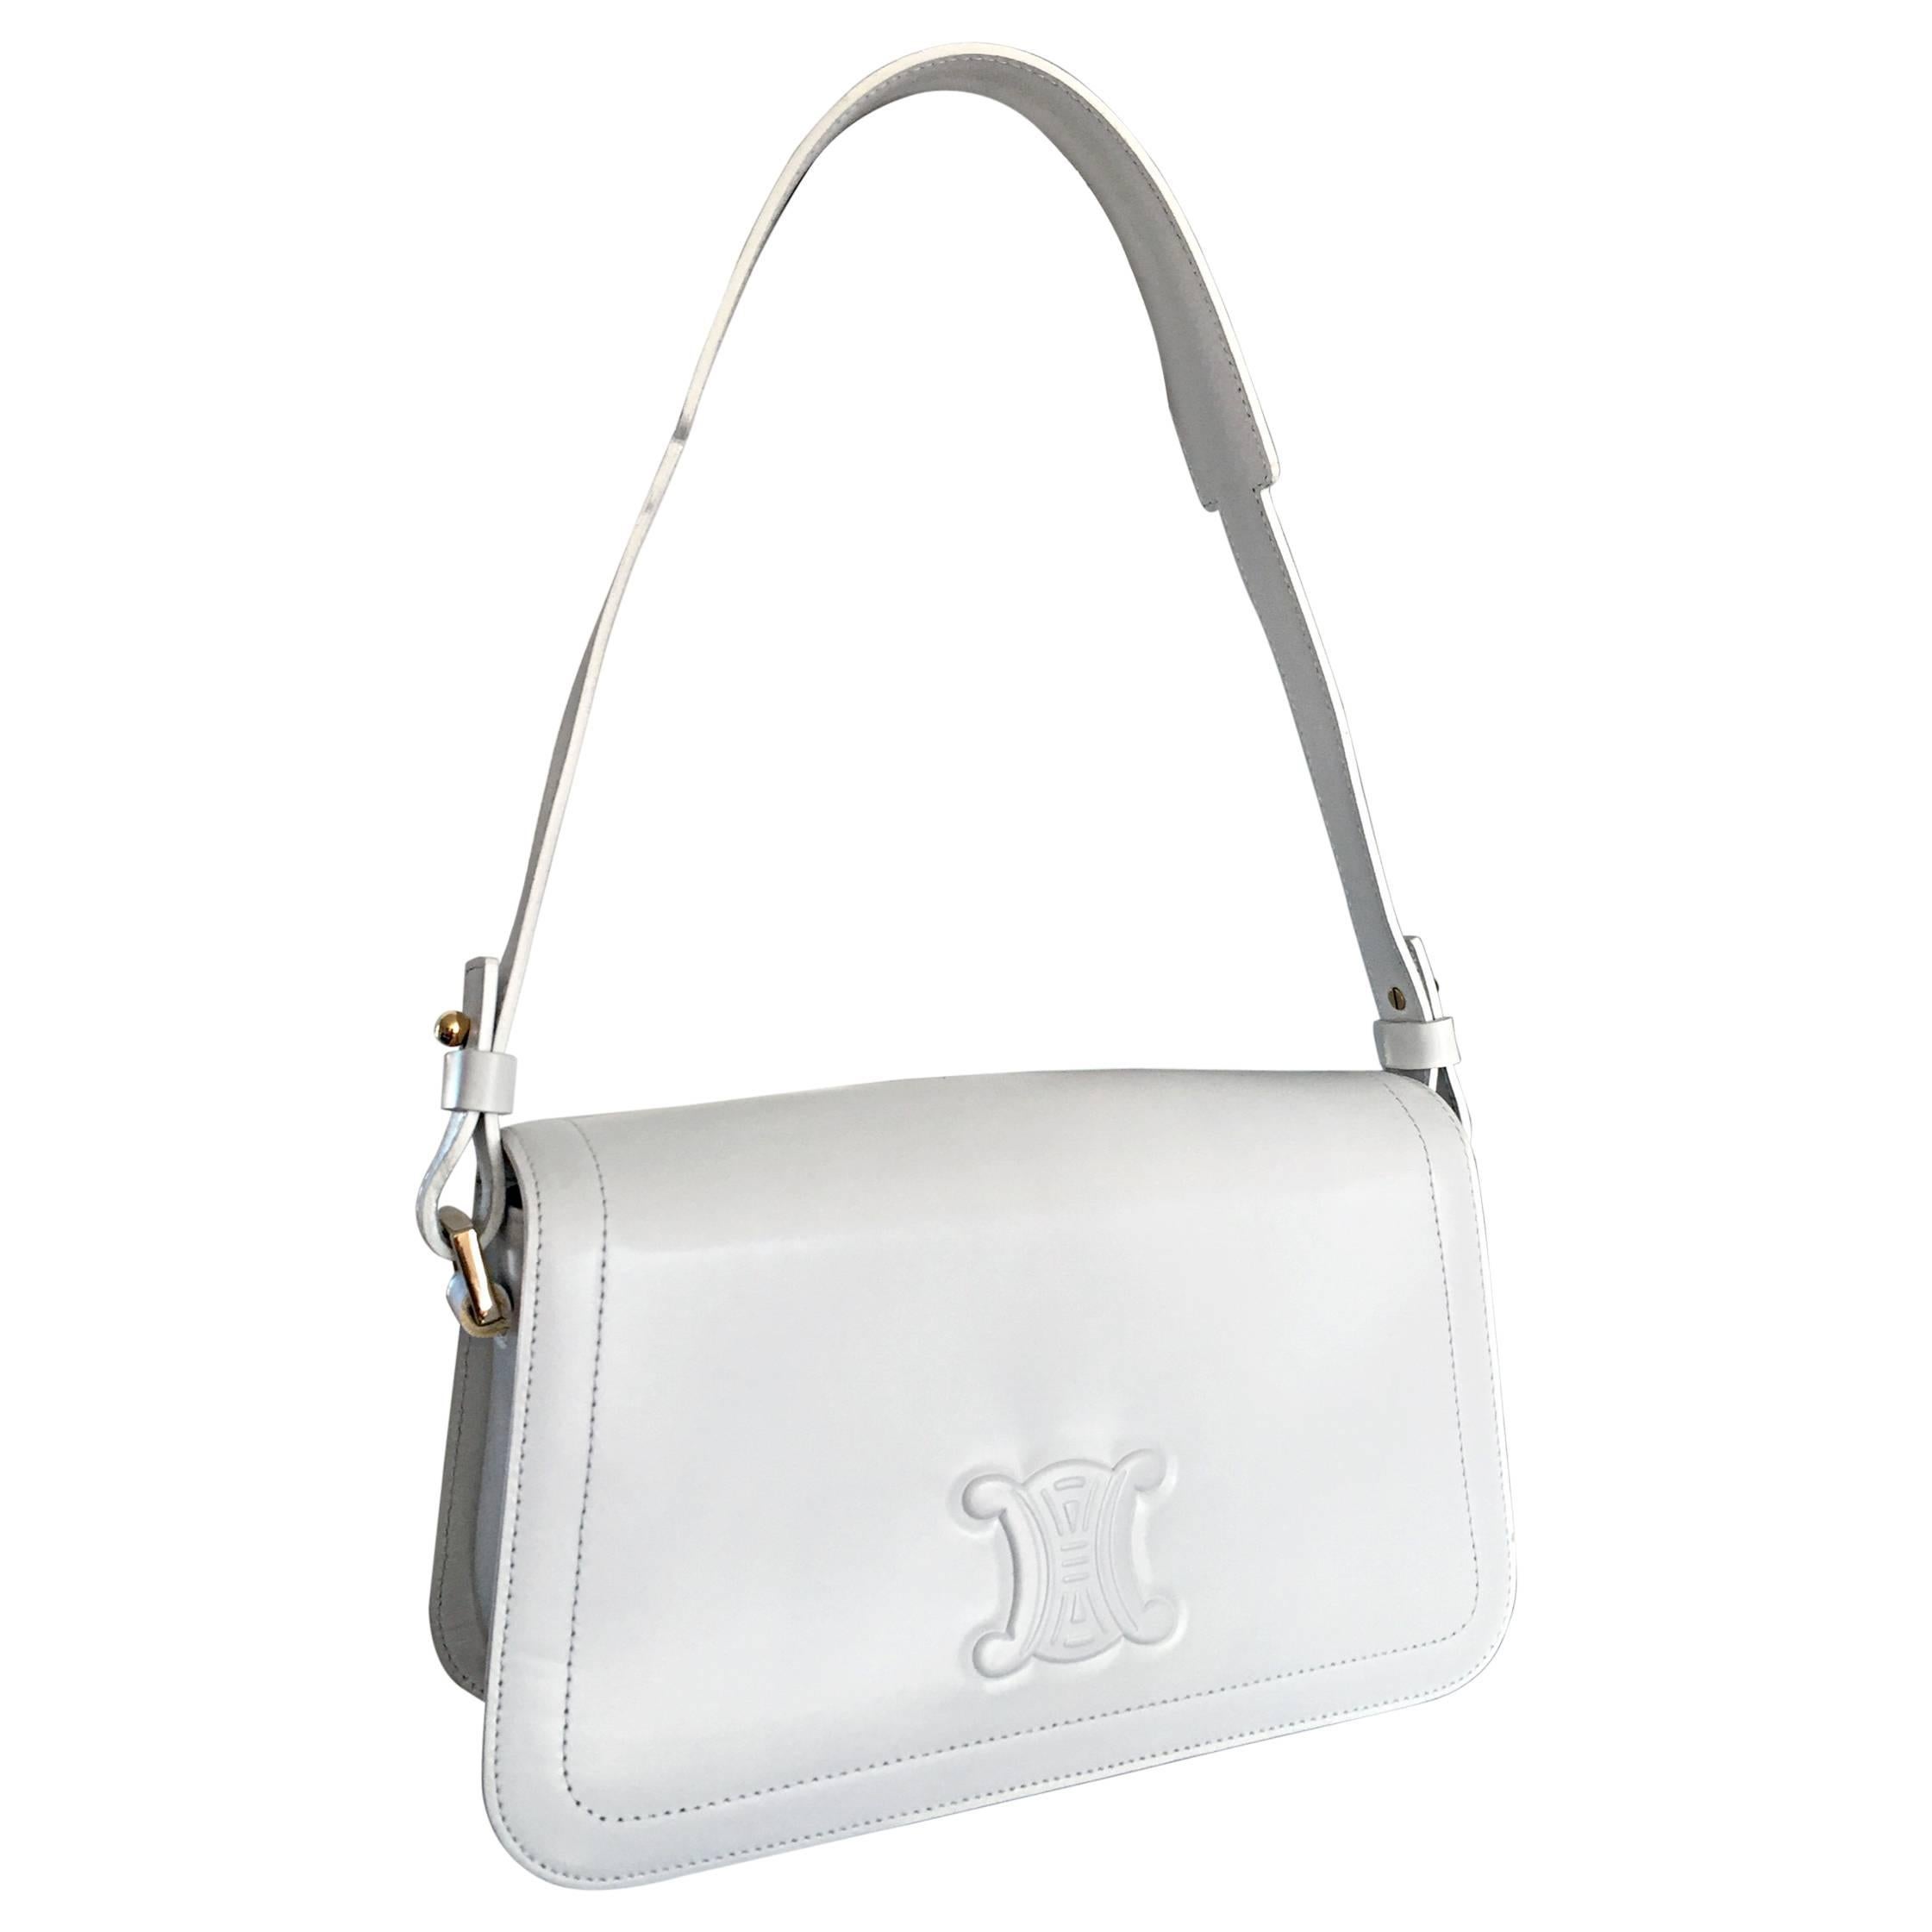 Vintage Celine New White Leather Structured Shoulder Bag Convertible Clutch 